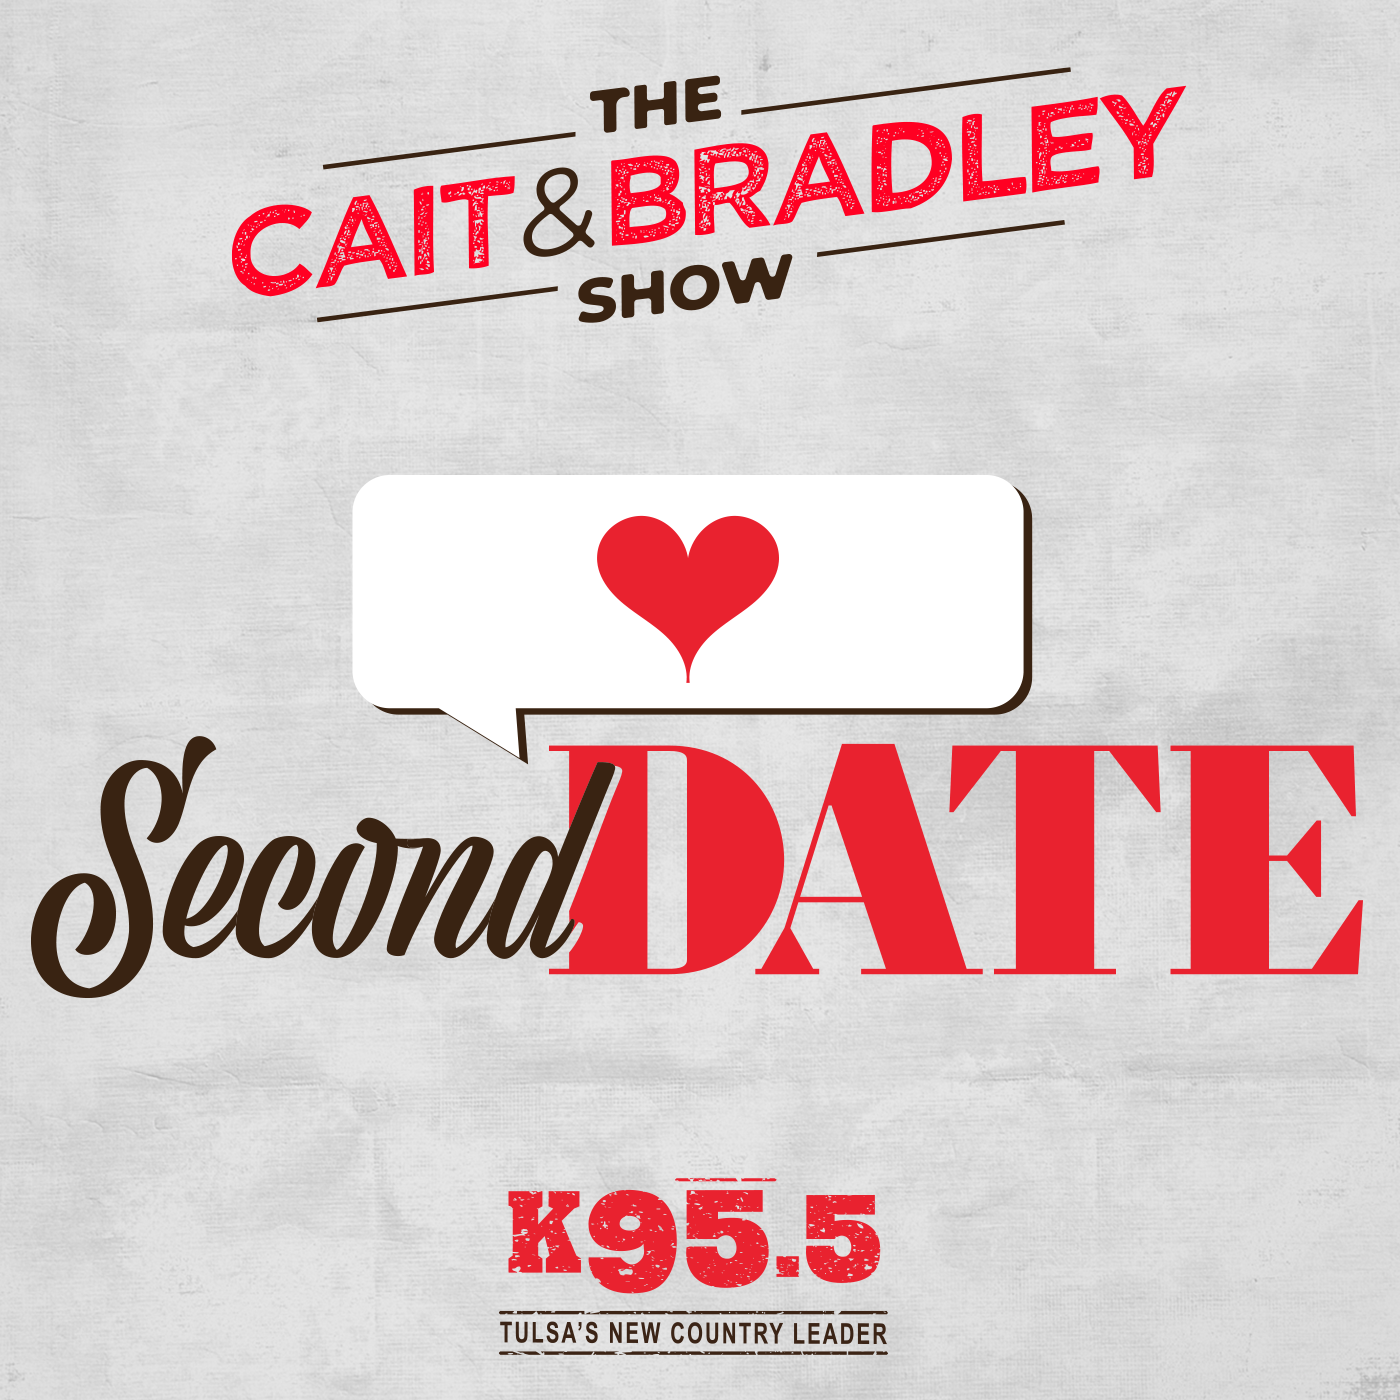 Cait & Bradley's Second Date